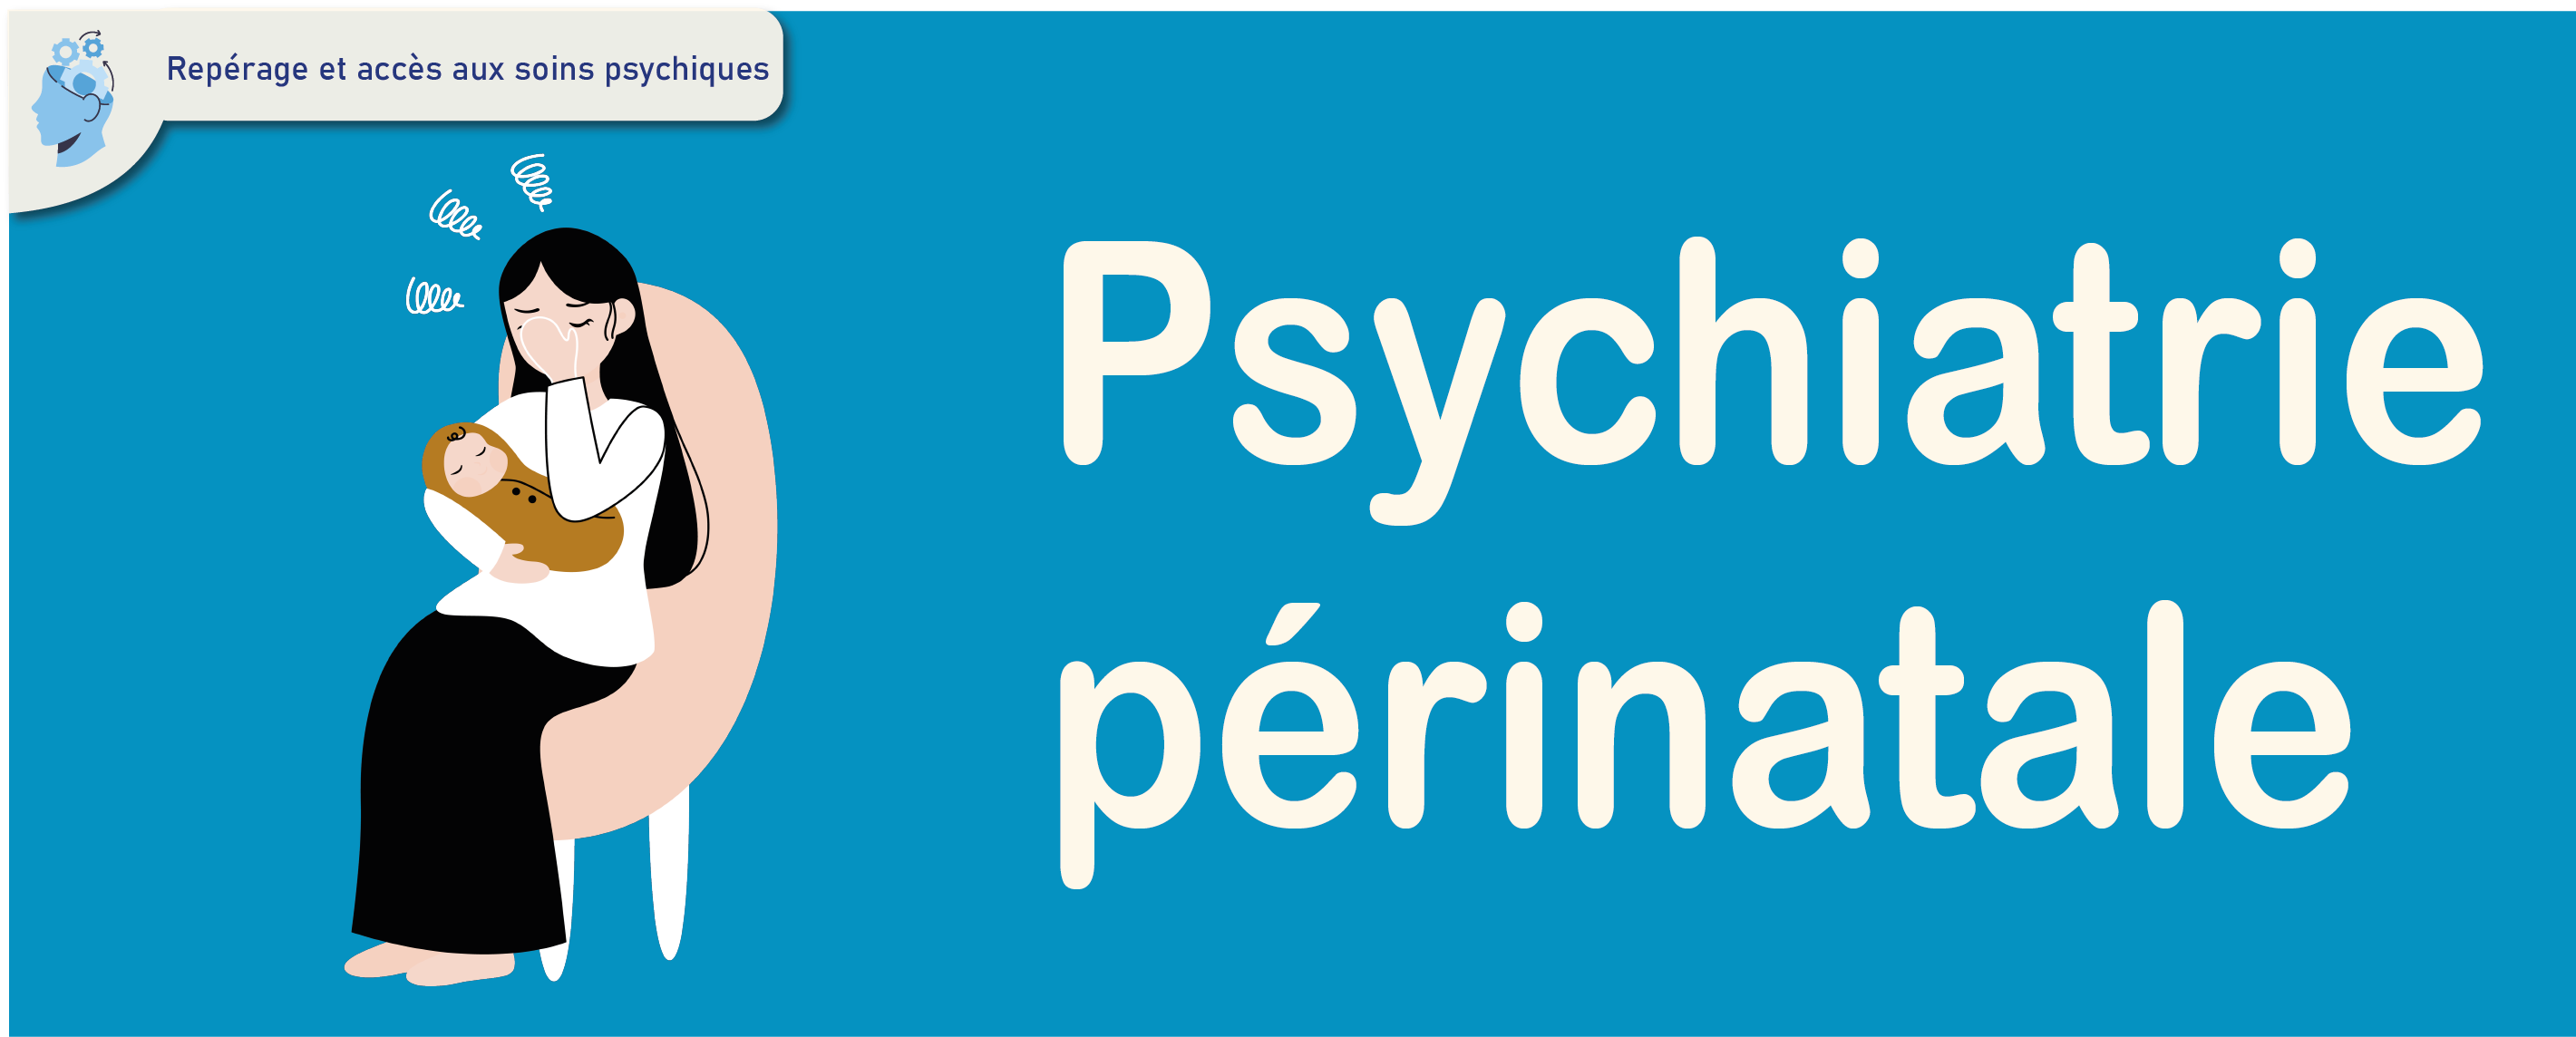 2276x1143_Psychiatrie périnatale.png